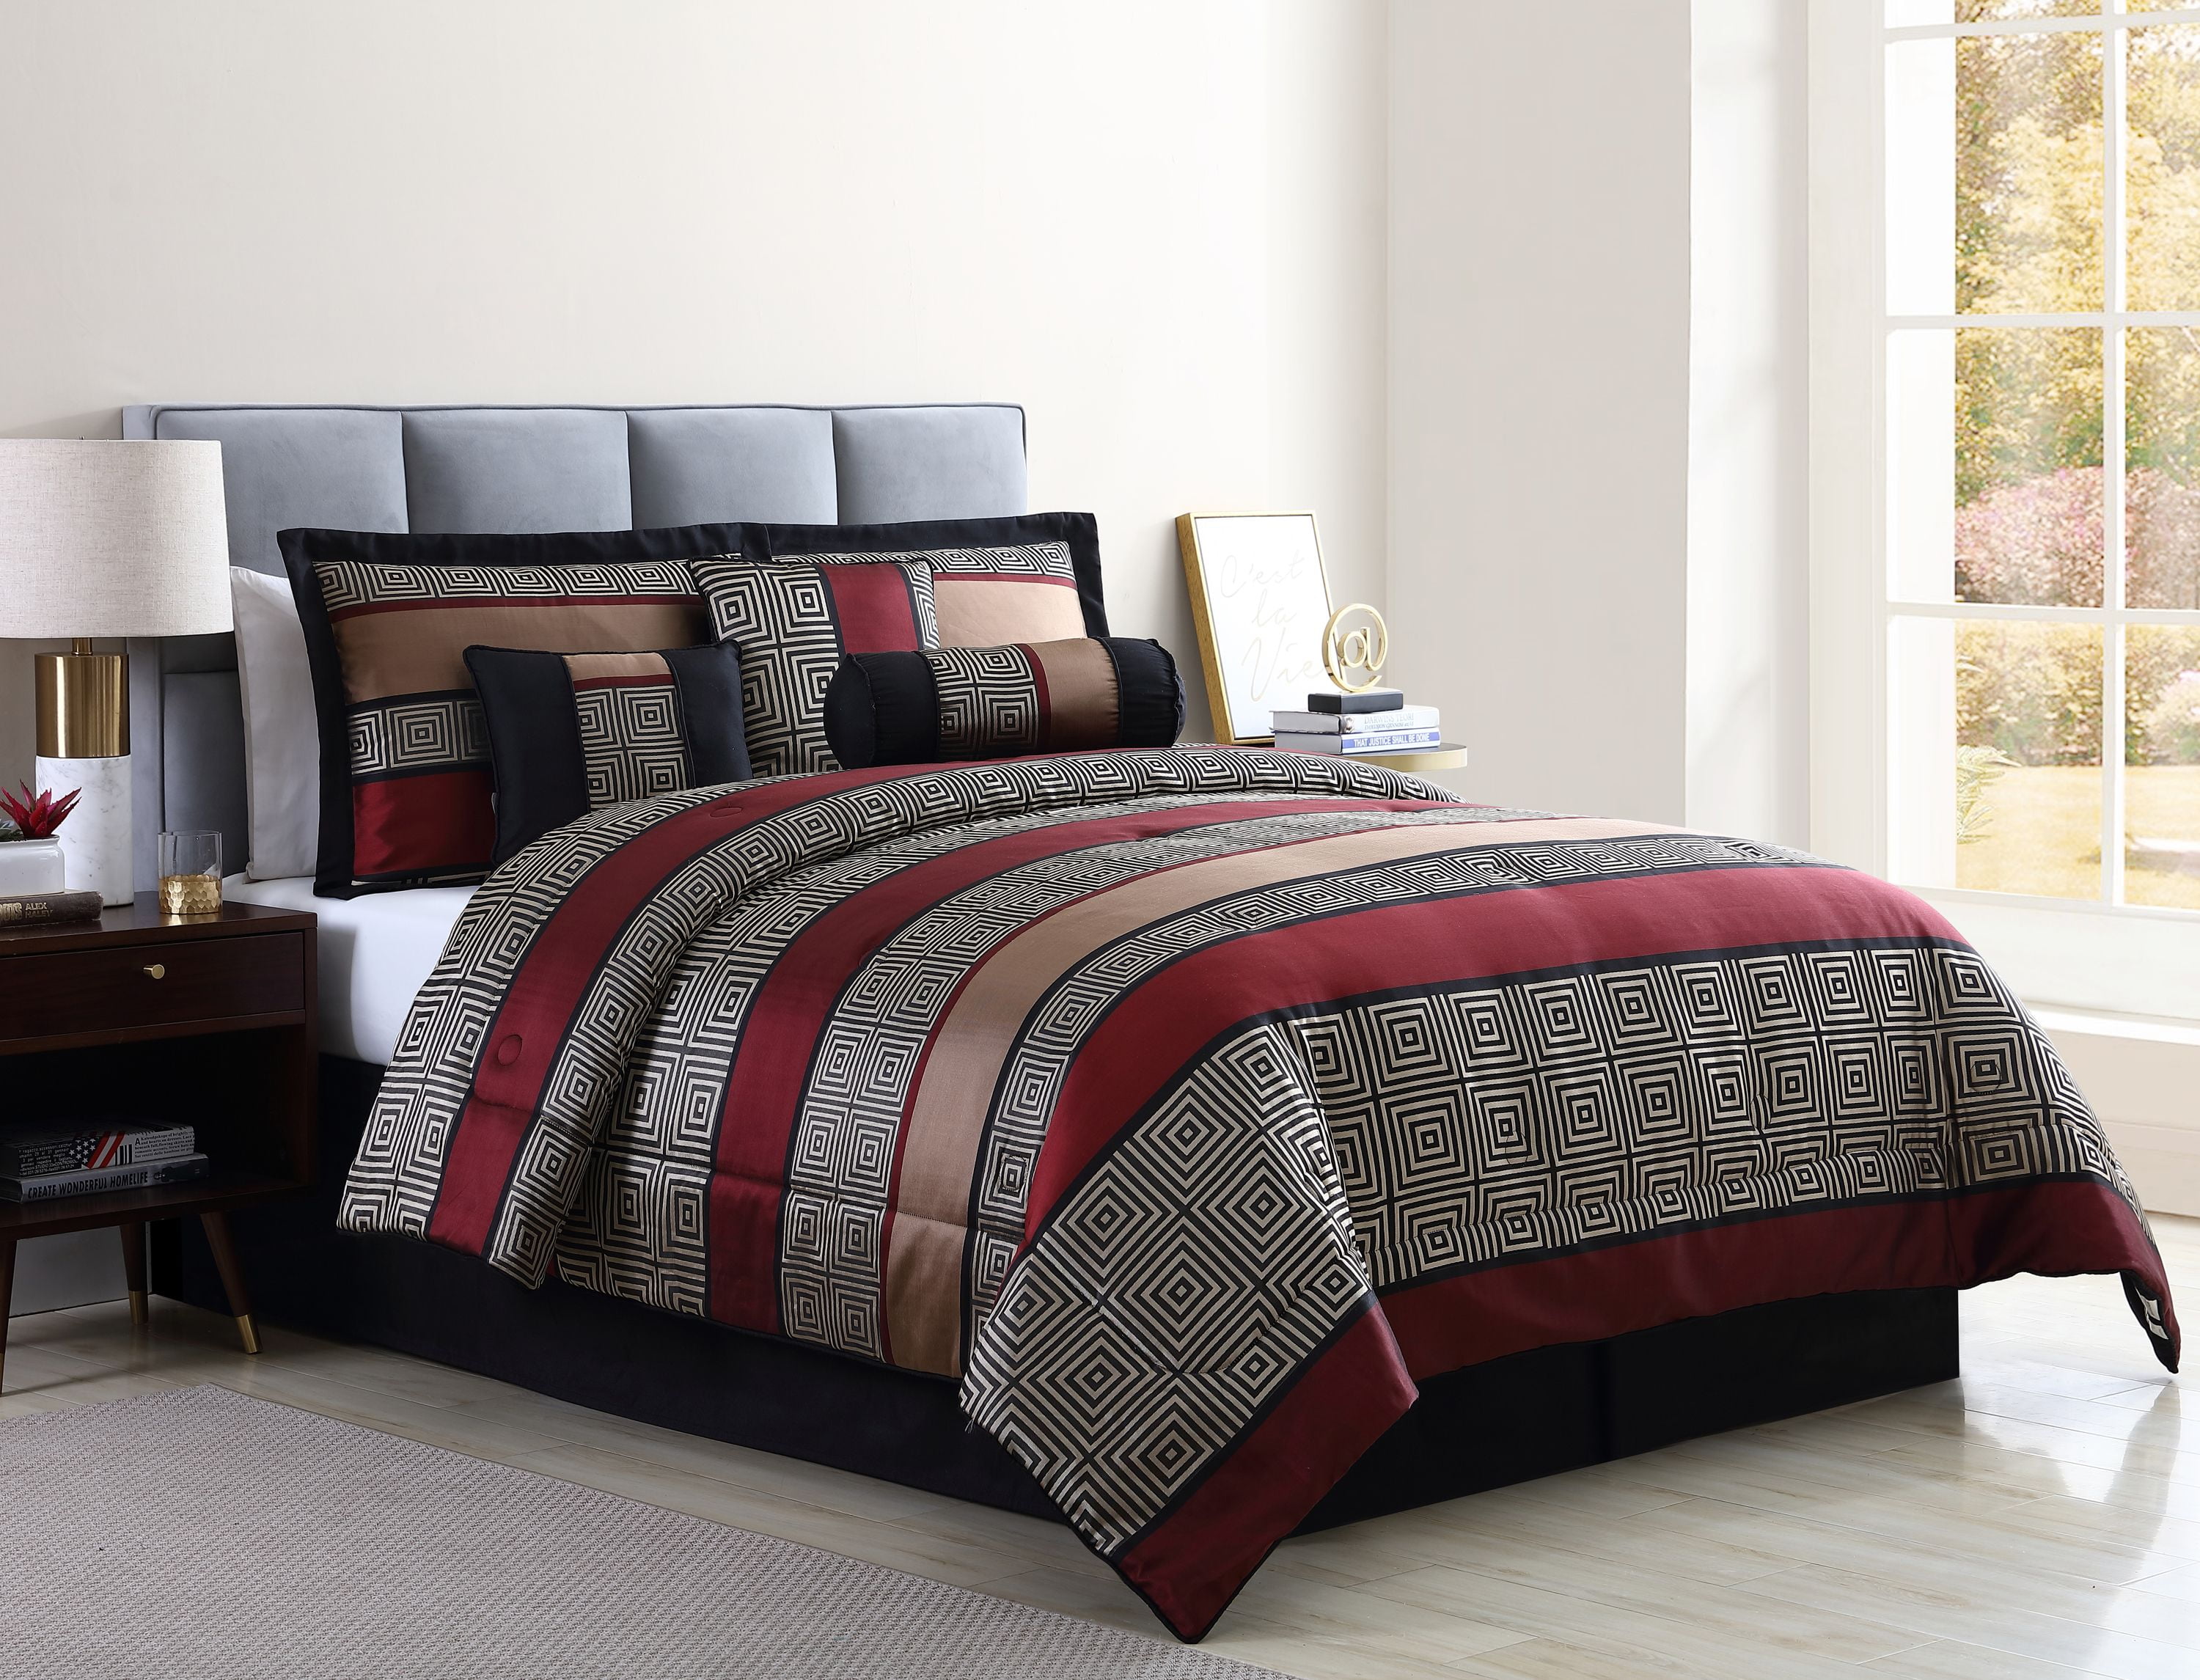 Mainstays Preston Woven Jacquard 7-Piece Comforter Set with BONUS Pillows and Sh 